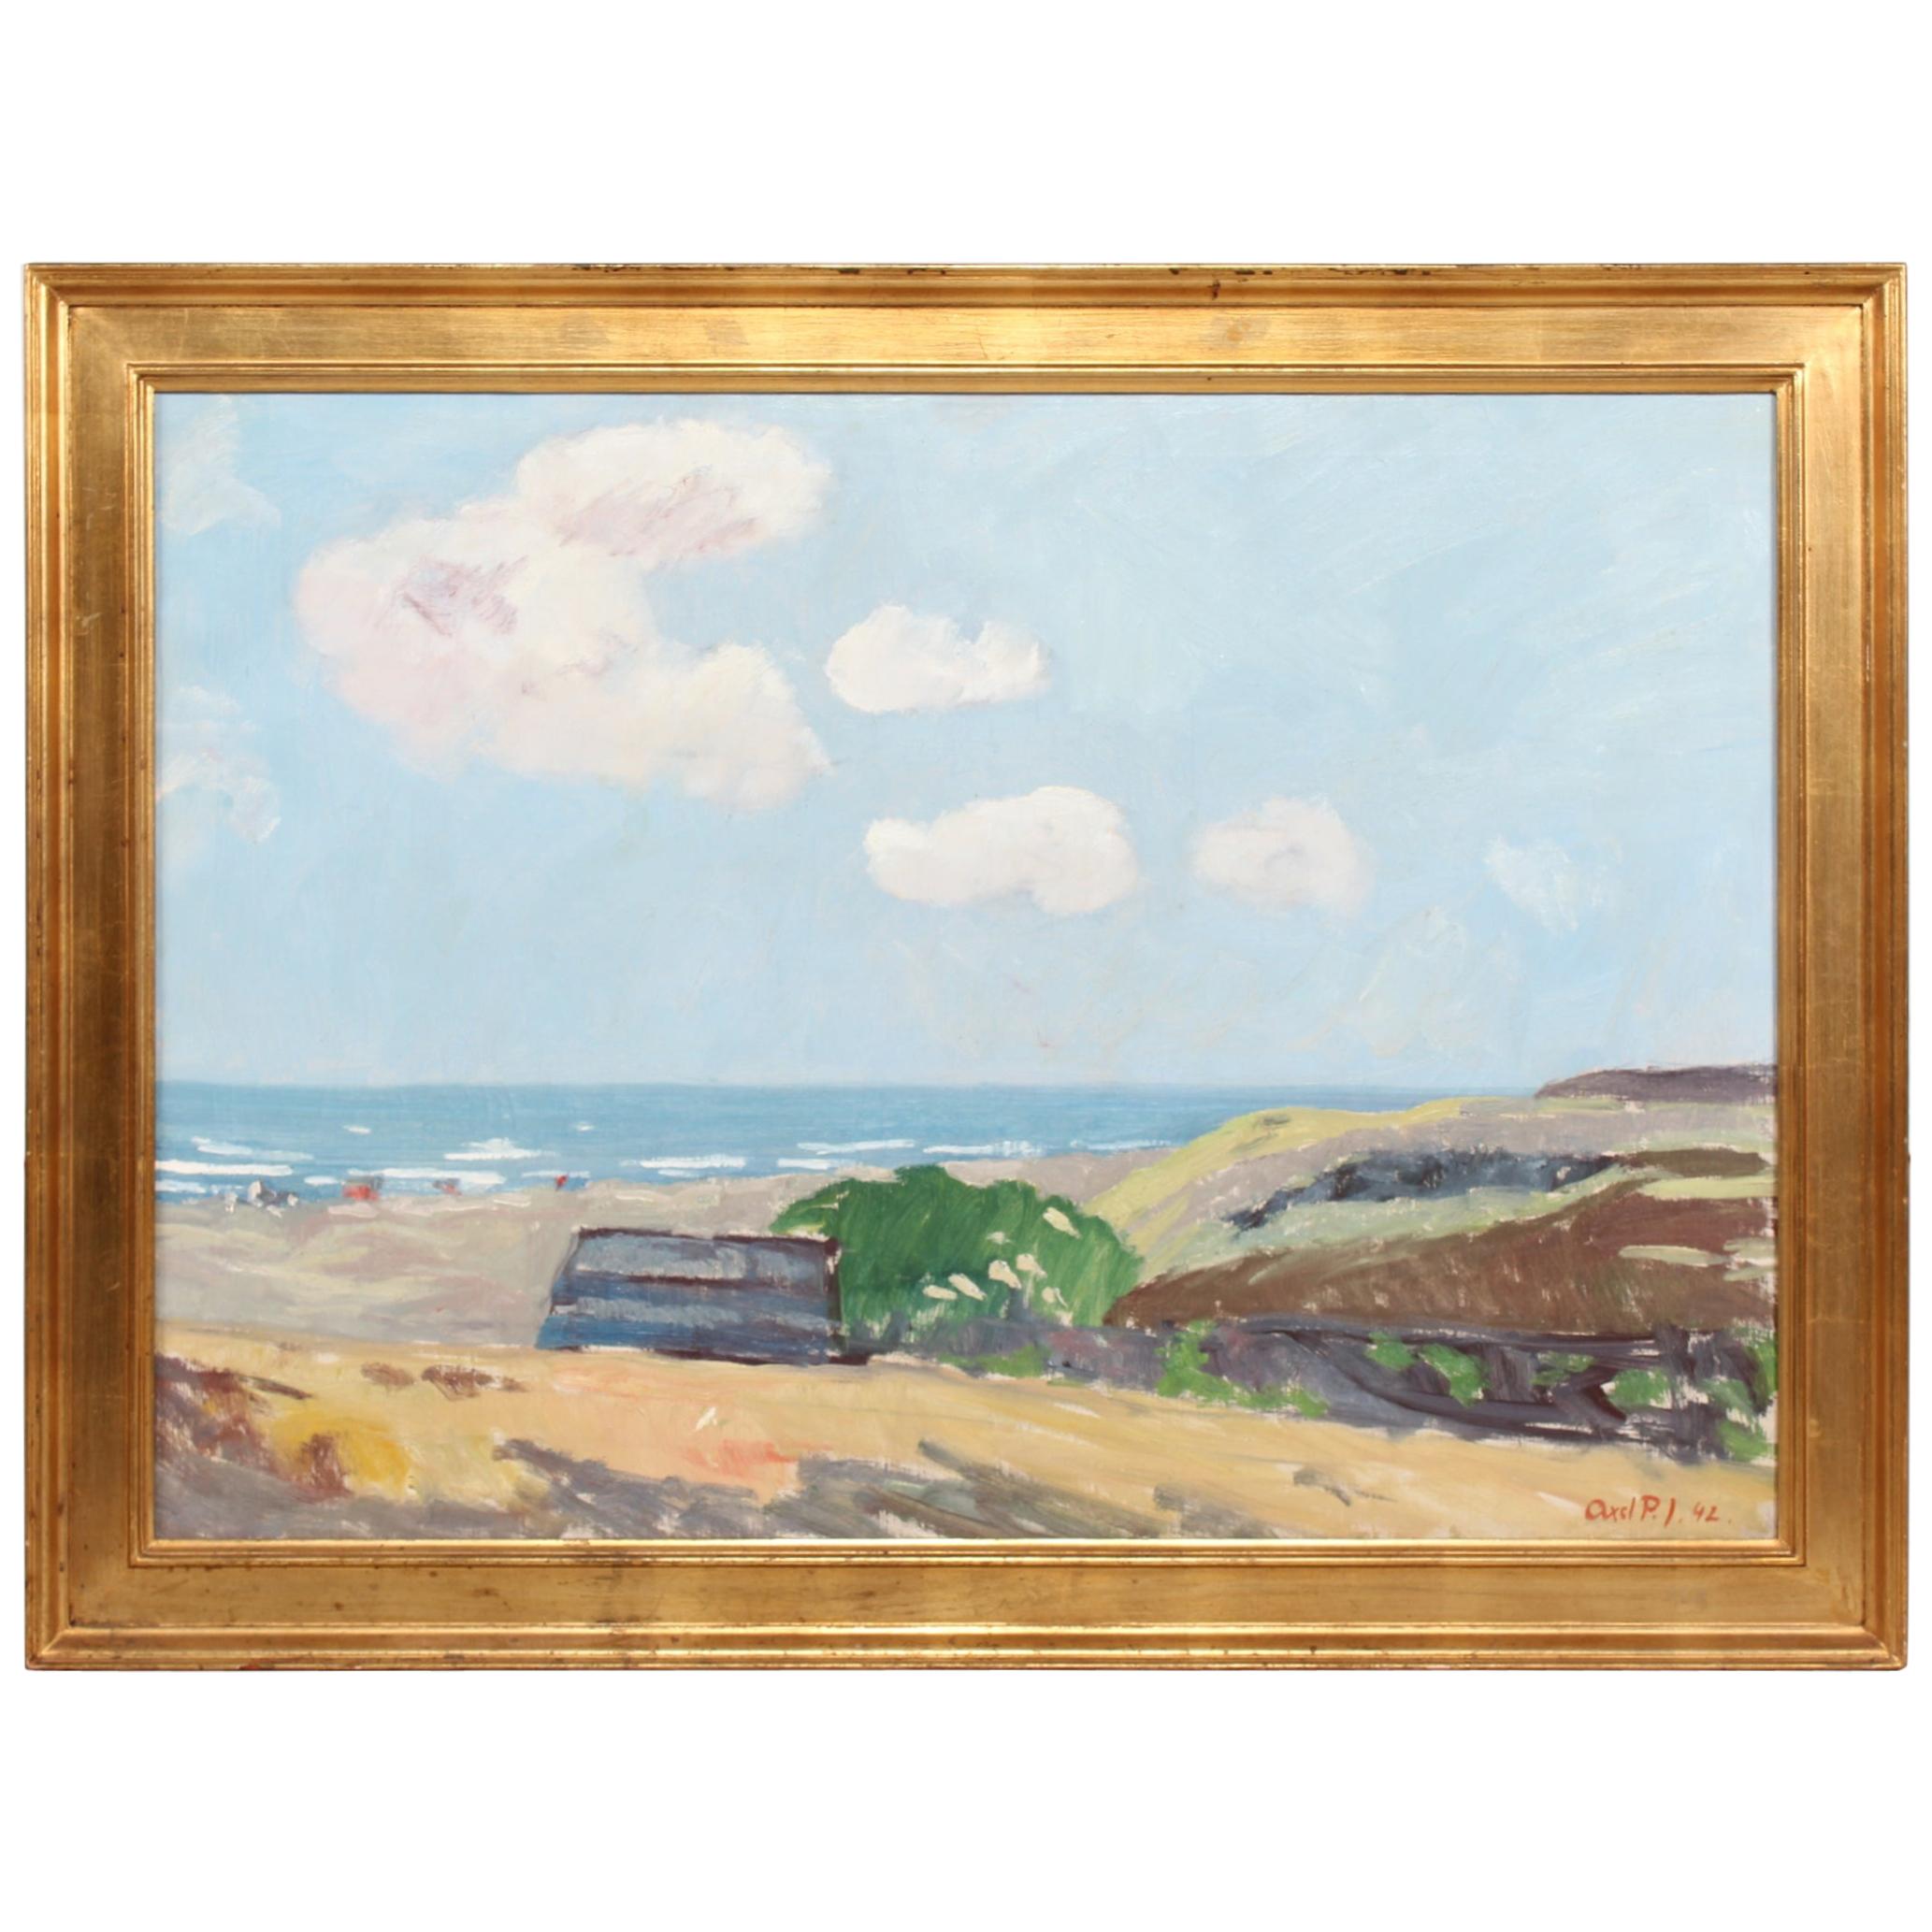 Danish Artist Axel P. Jensen Painting Landscape in Denmark Oil on Canvas, 1942